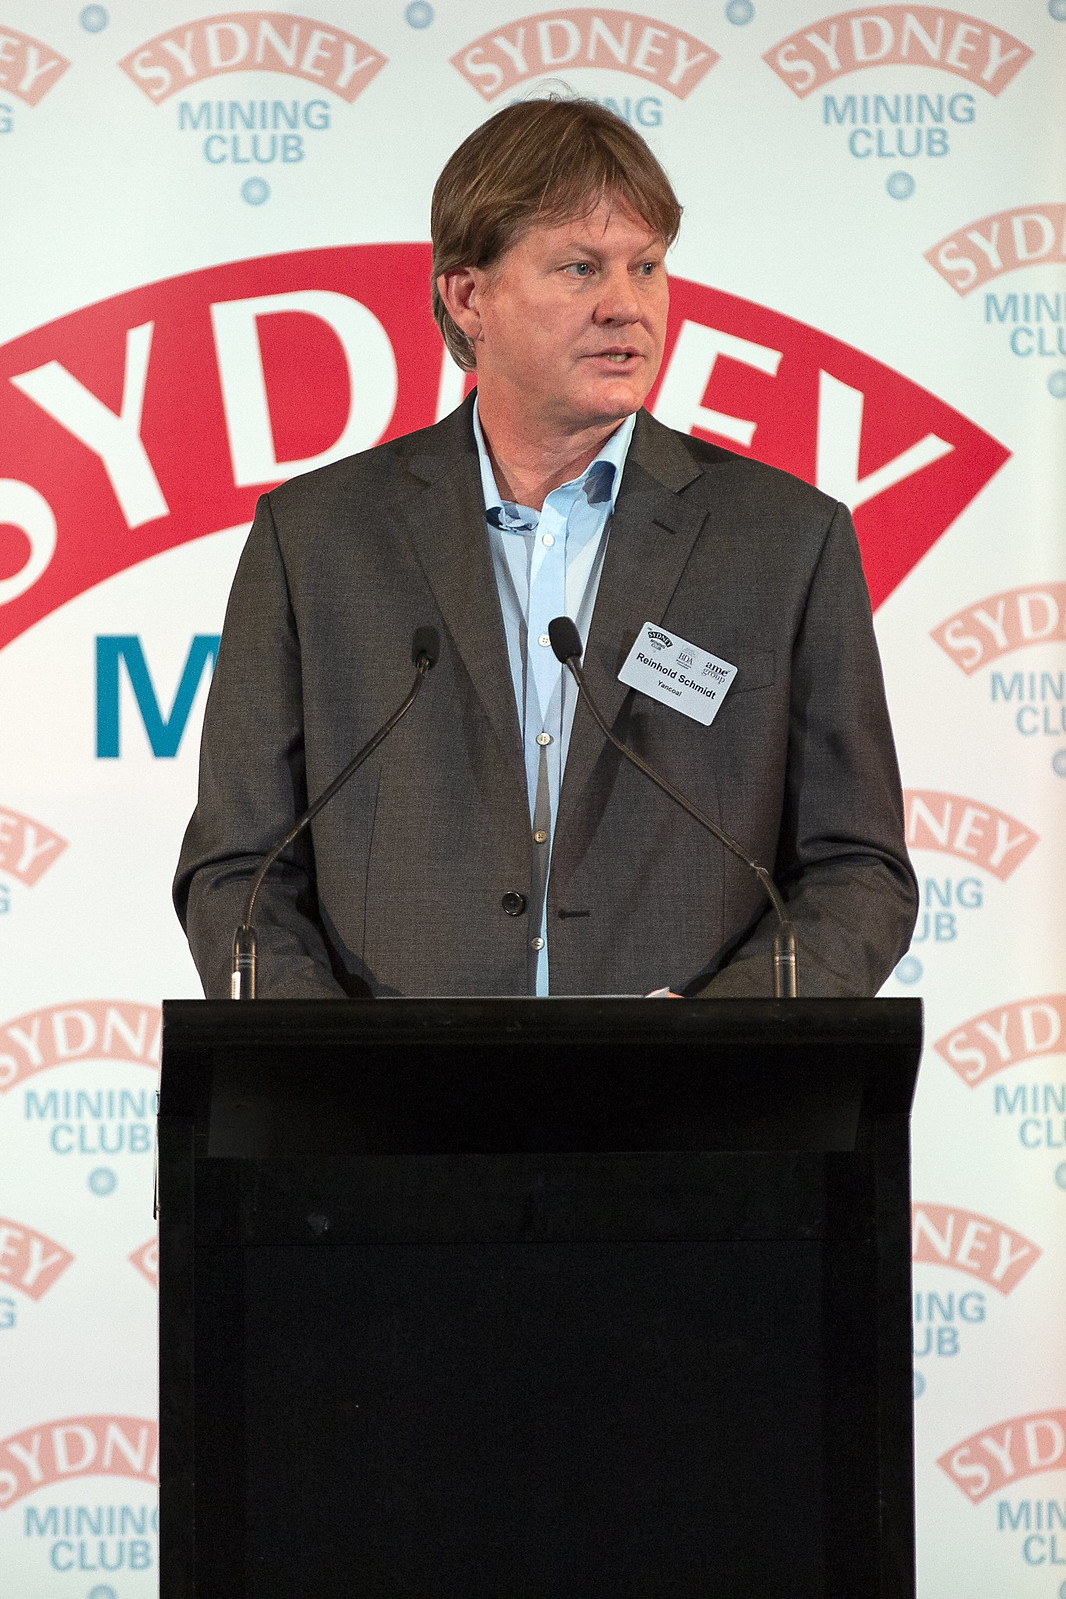 Sydney Mining Club – 7 June 2018